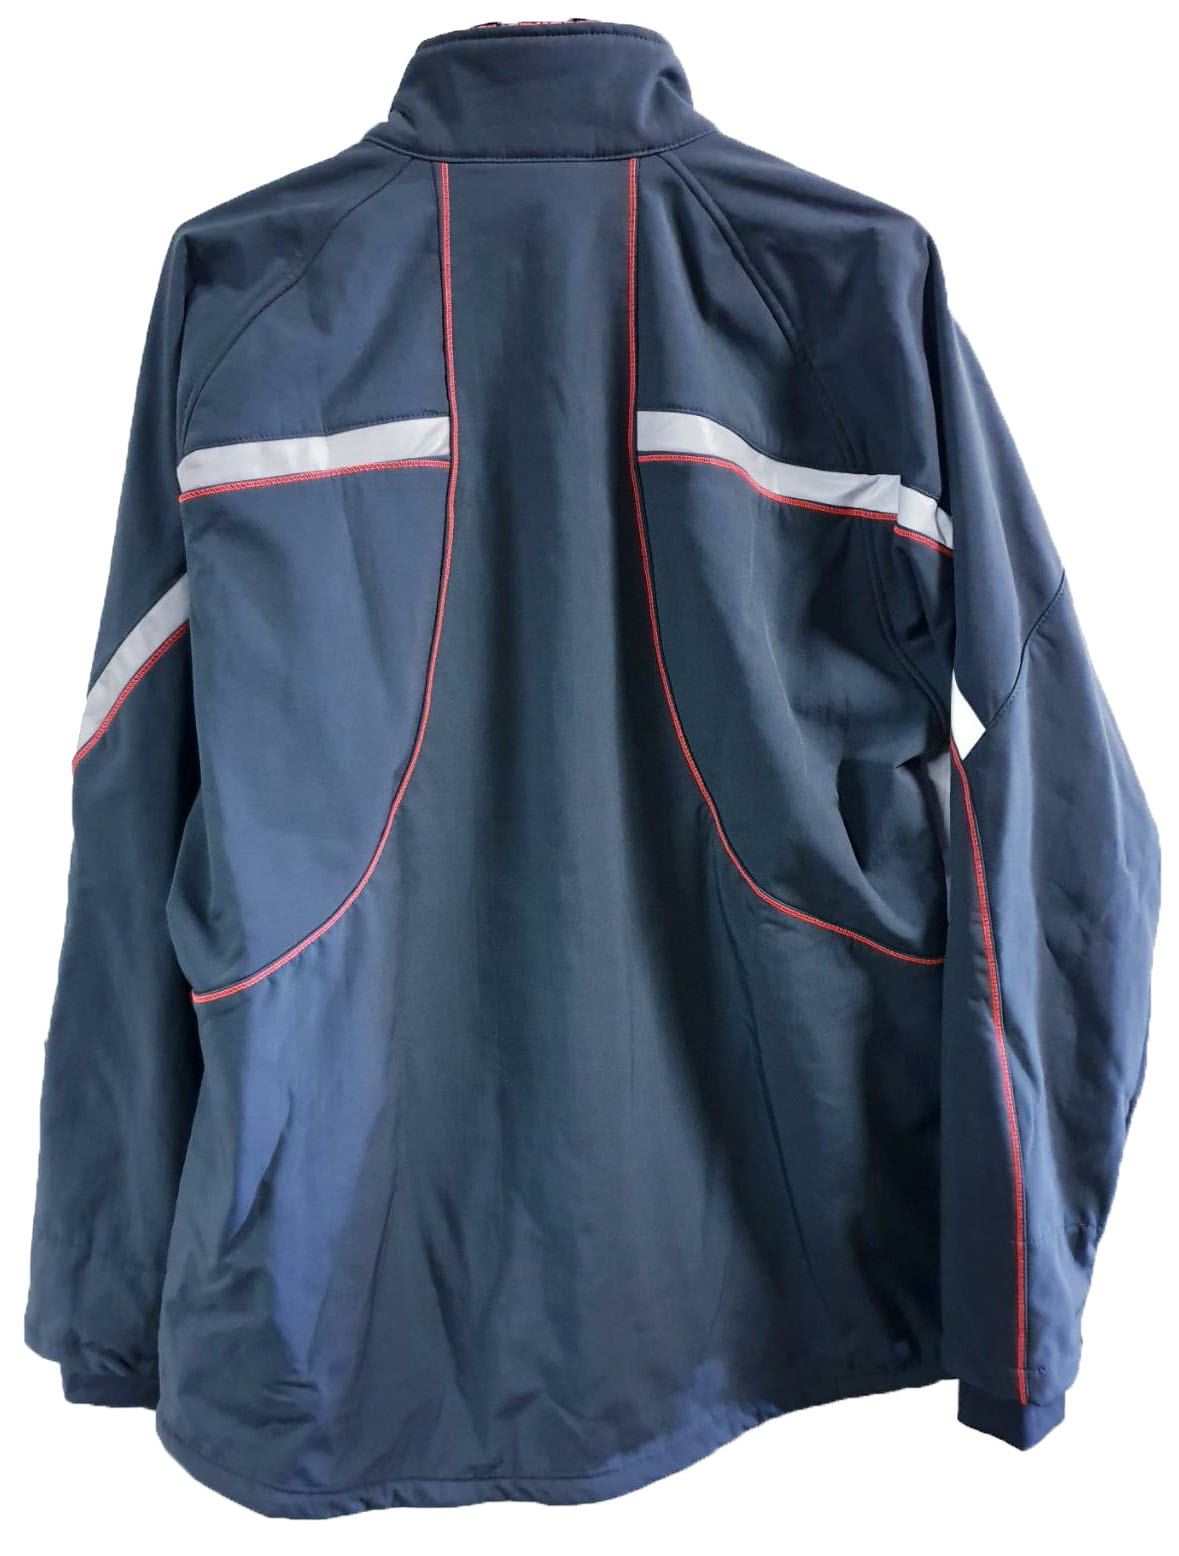 Asics Men's Ultra Waterproof Running Jacket with Reflector Strip, Dark Grey, Medium - image 4 of 6